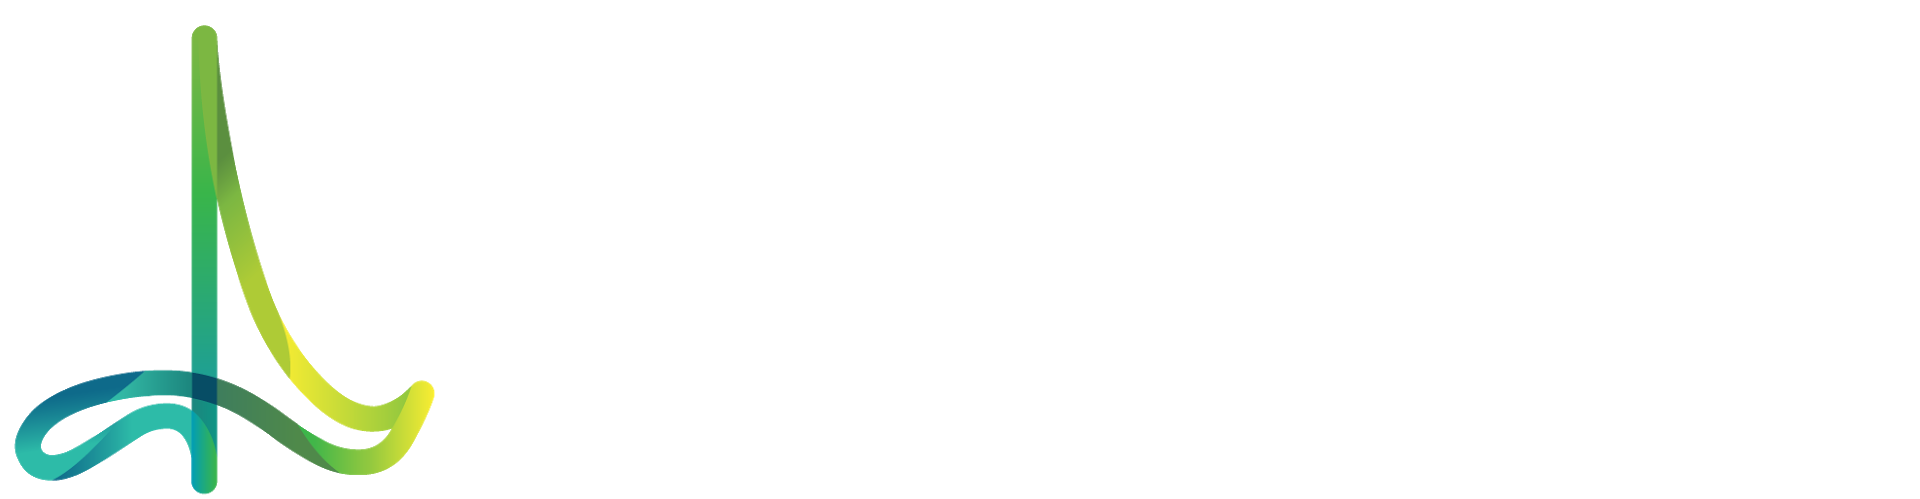 dbm-logo-academy.png